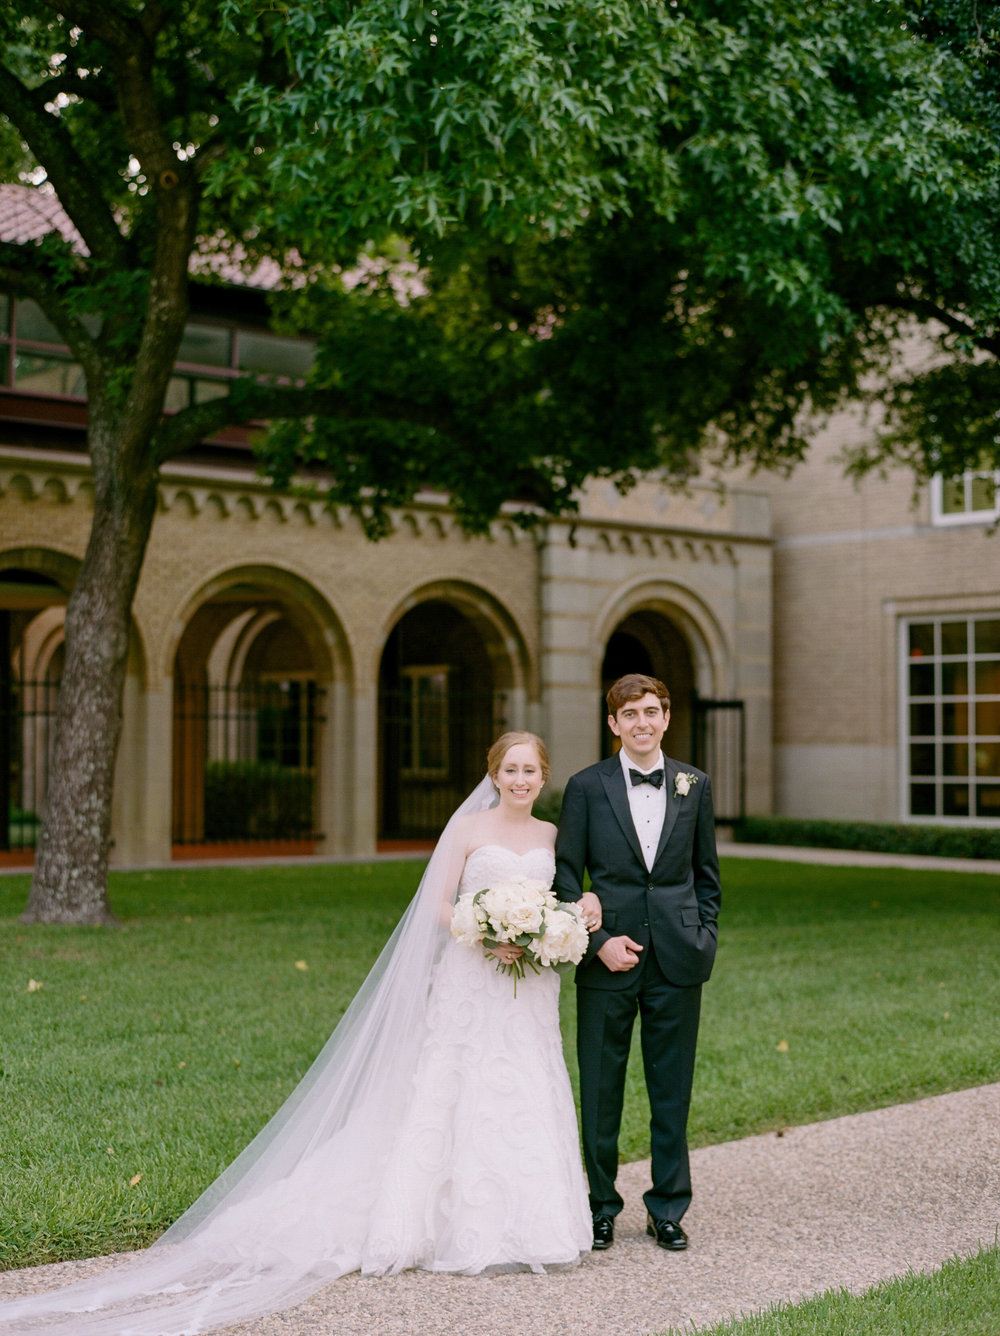 Fine-Art-Film-Houston-Wedding-Photographer-Best-Top-Luxury-Texas-Austin-Dallas-Destination-Dana-Fernandez-Photography-River-Oaks-Country-Club-South-Main-Baptist-Ceremony-Reception-Wedding-31.jpg